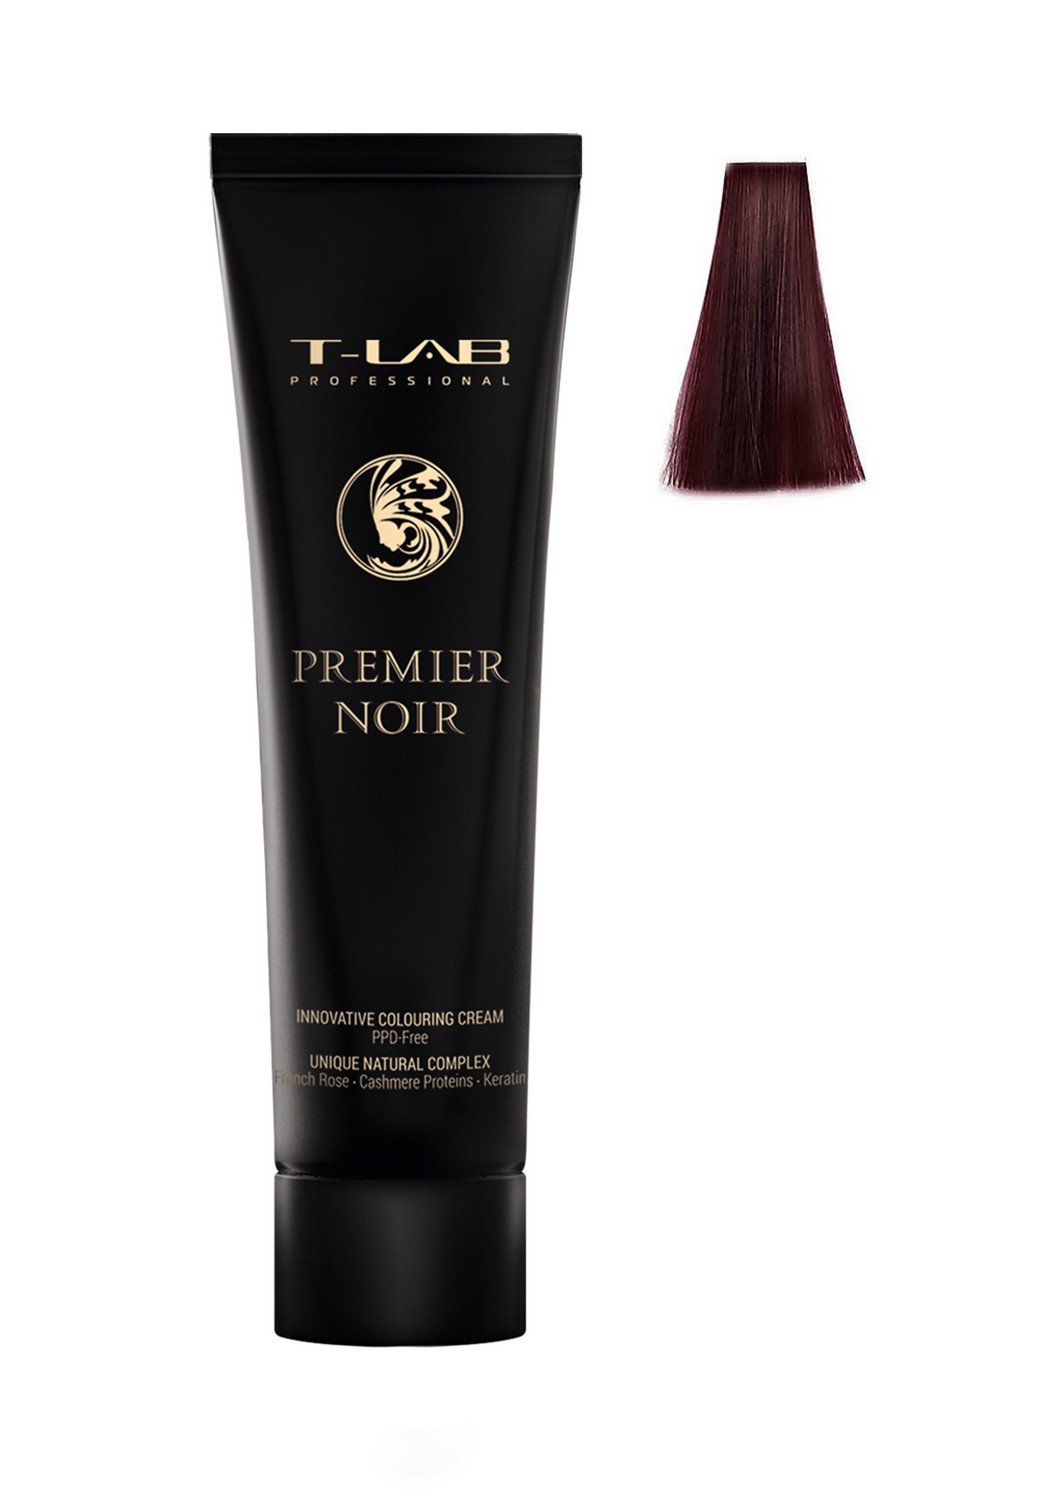 Крем-краска T-LAB Professional Premier Noir colouring cream, оттенок 4.62 (extra red iridescent brow) - фото 2